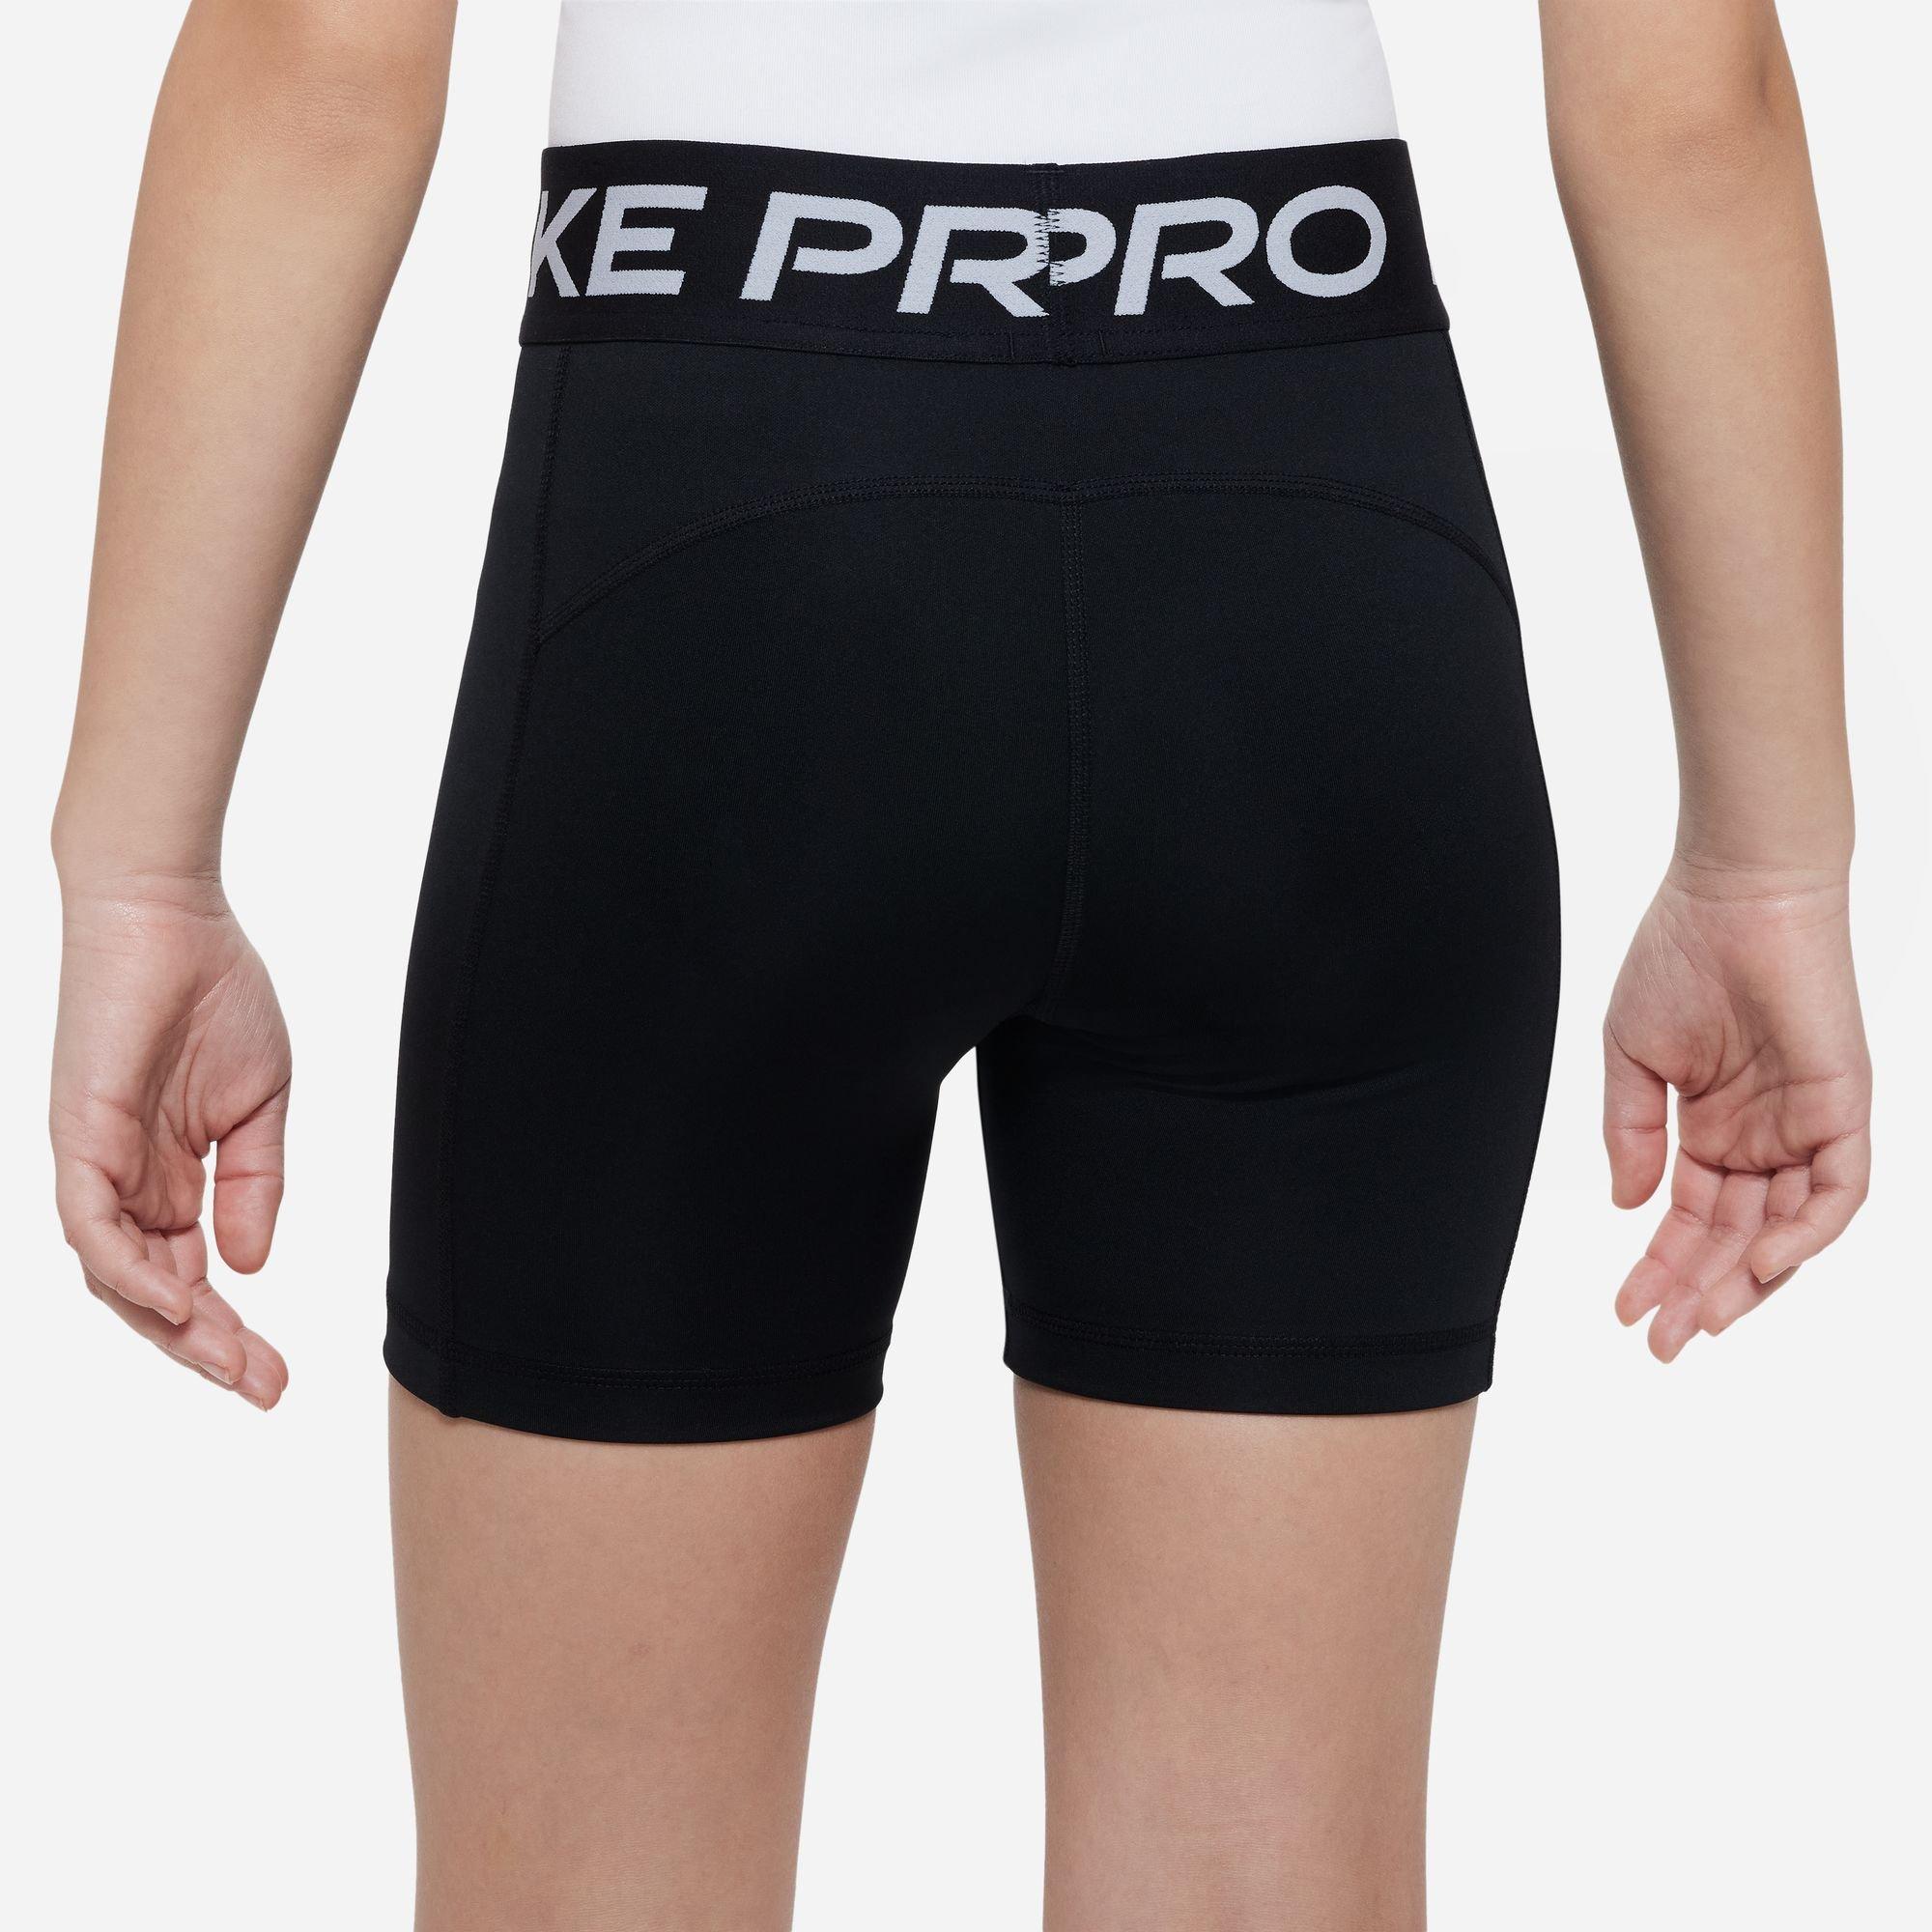 Nike Pro Girls' Dri-FIT Shorts.